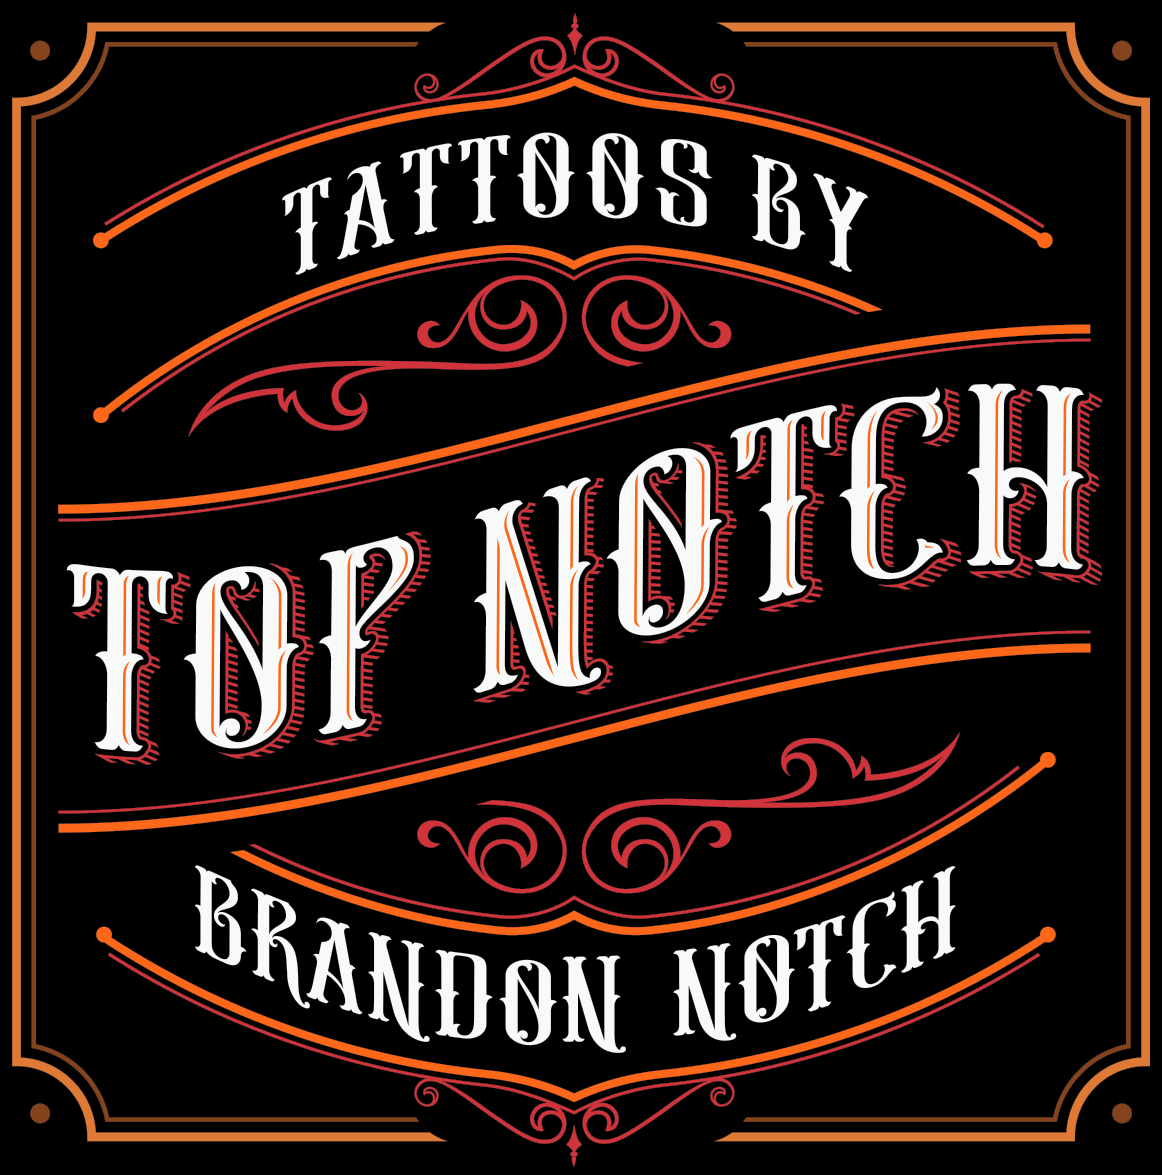 Top notch tattoos